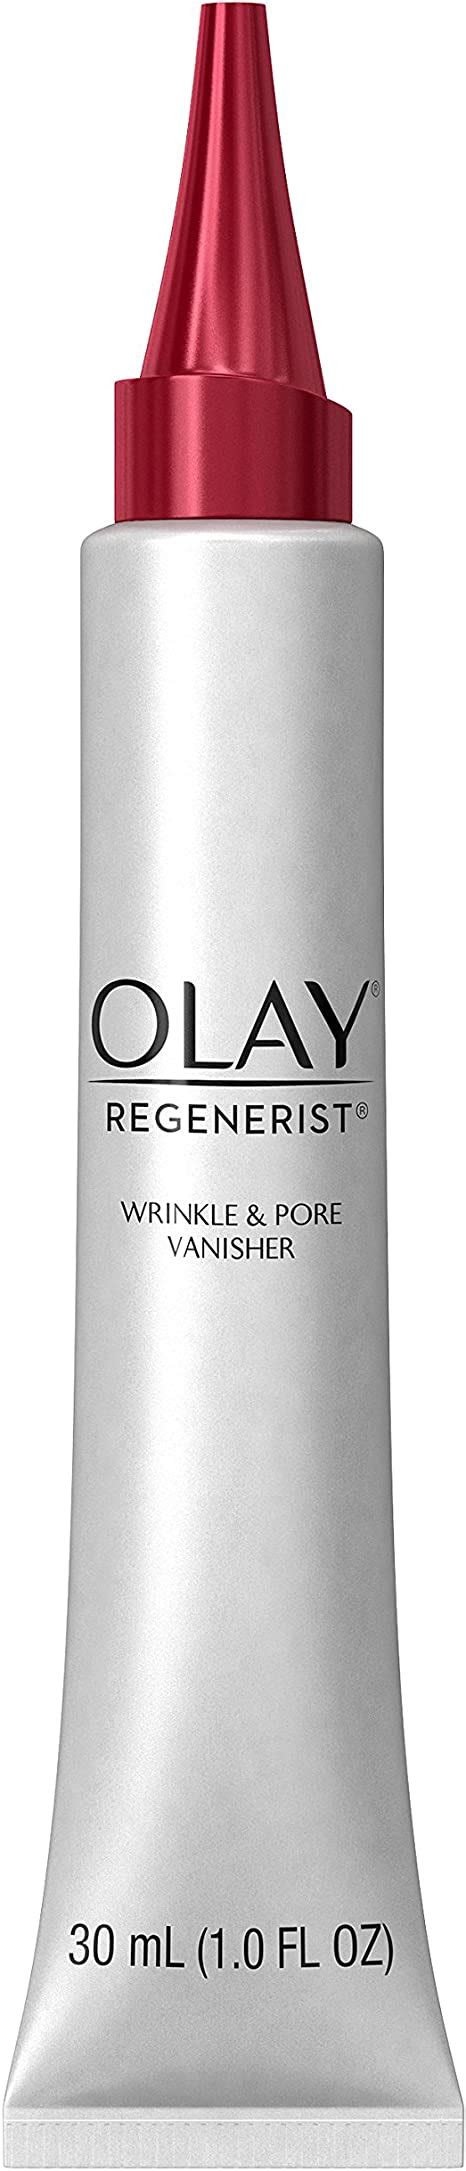 Olay Regenerist Instant Fix Wrinkle And Pore Vanisher 10 Oz Amazon